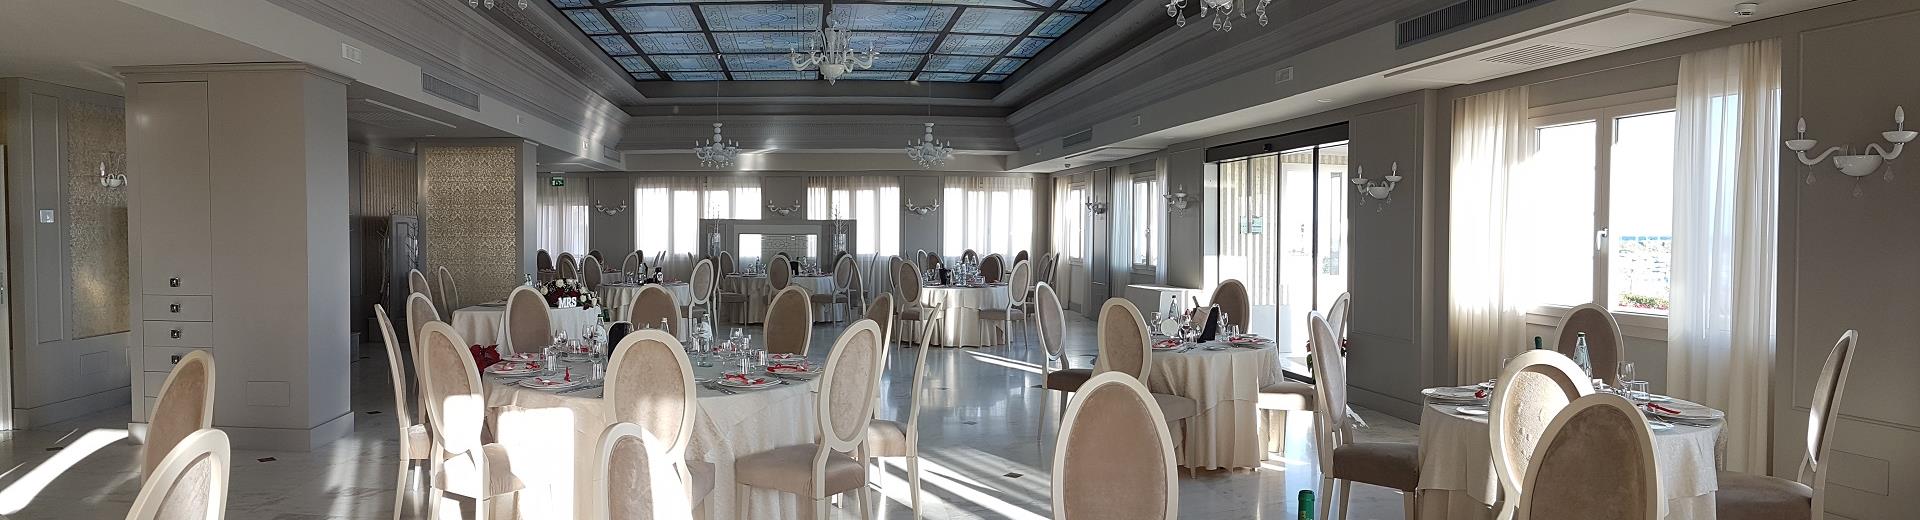 For your wedding, choose the Best Western Plus Hotel Perla del Porto 4-star